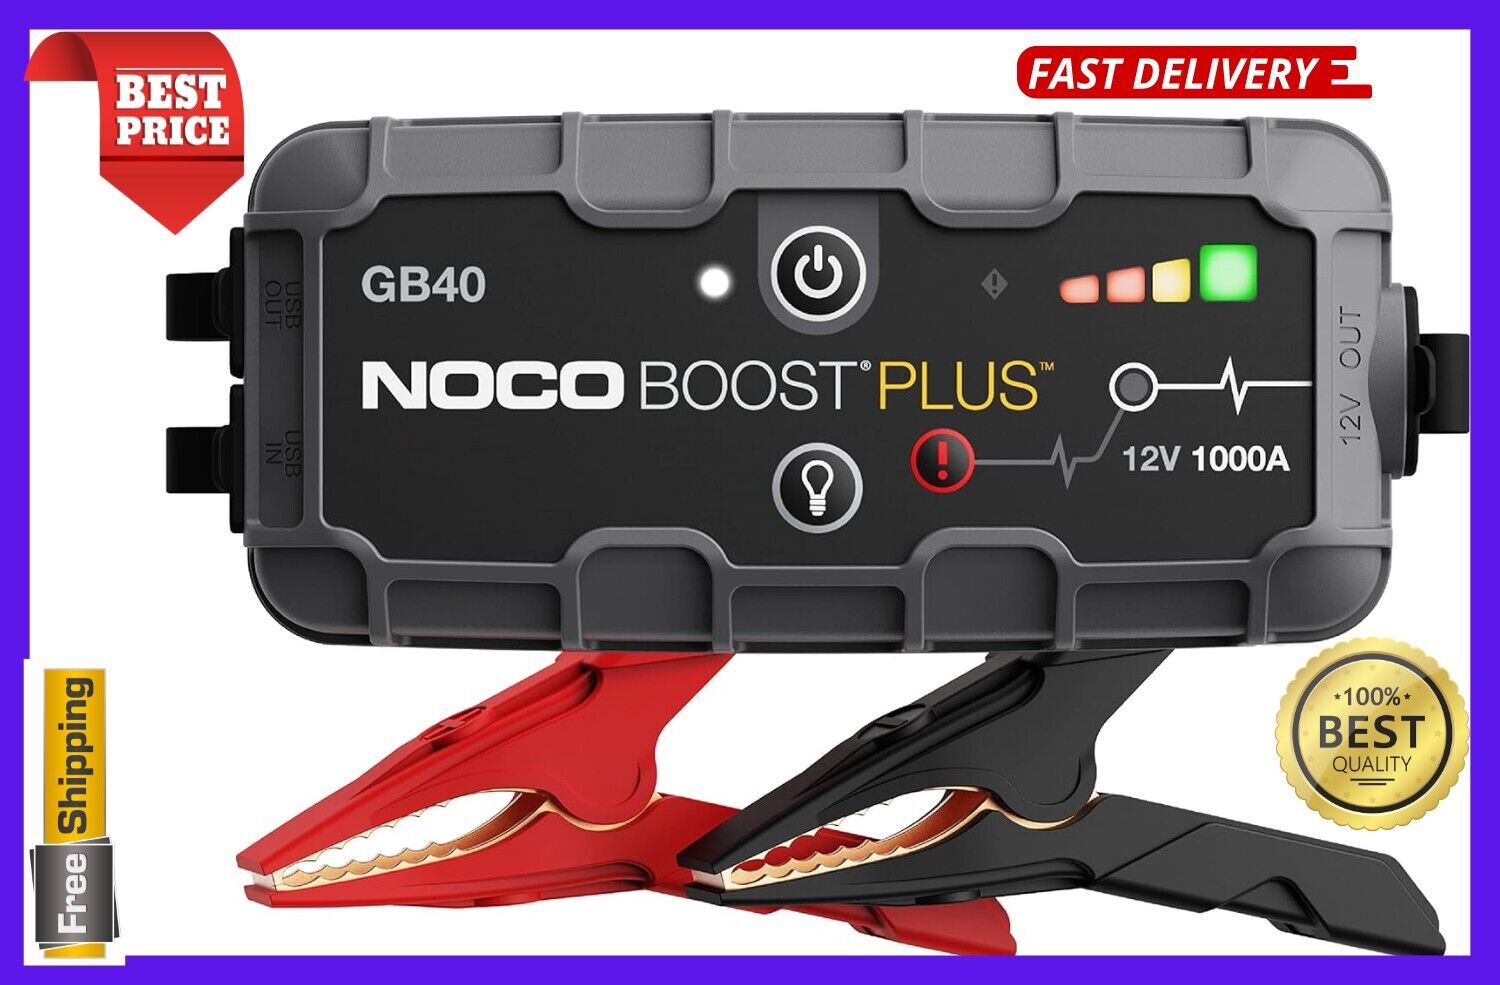 NOCO Boost Plus GB40 1000A UltraSafe Car Battery Jump Starter 12V Battery Pack